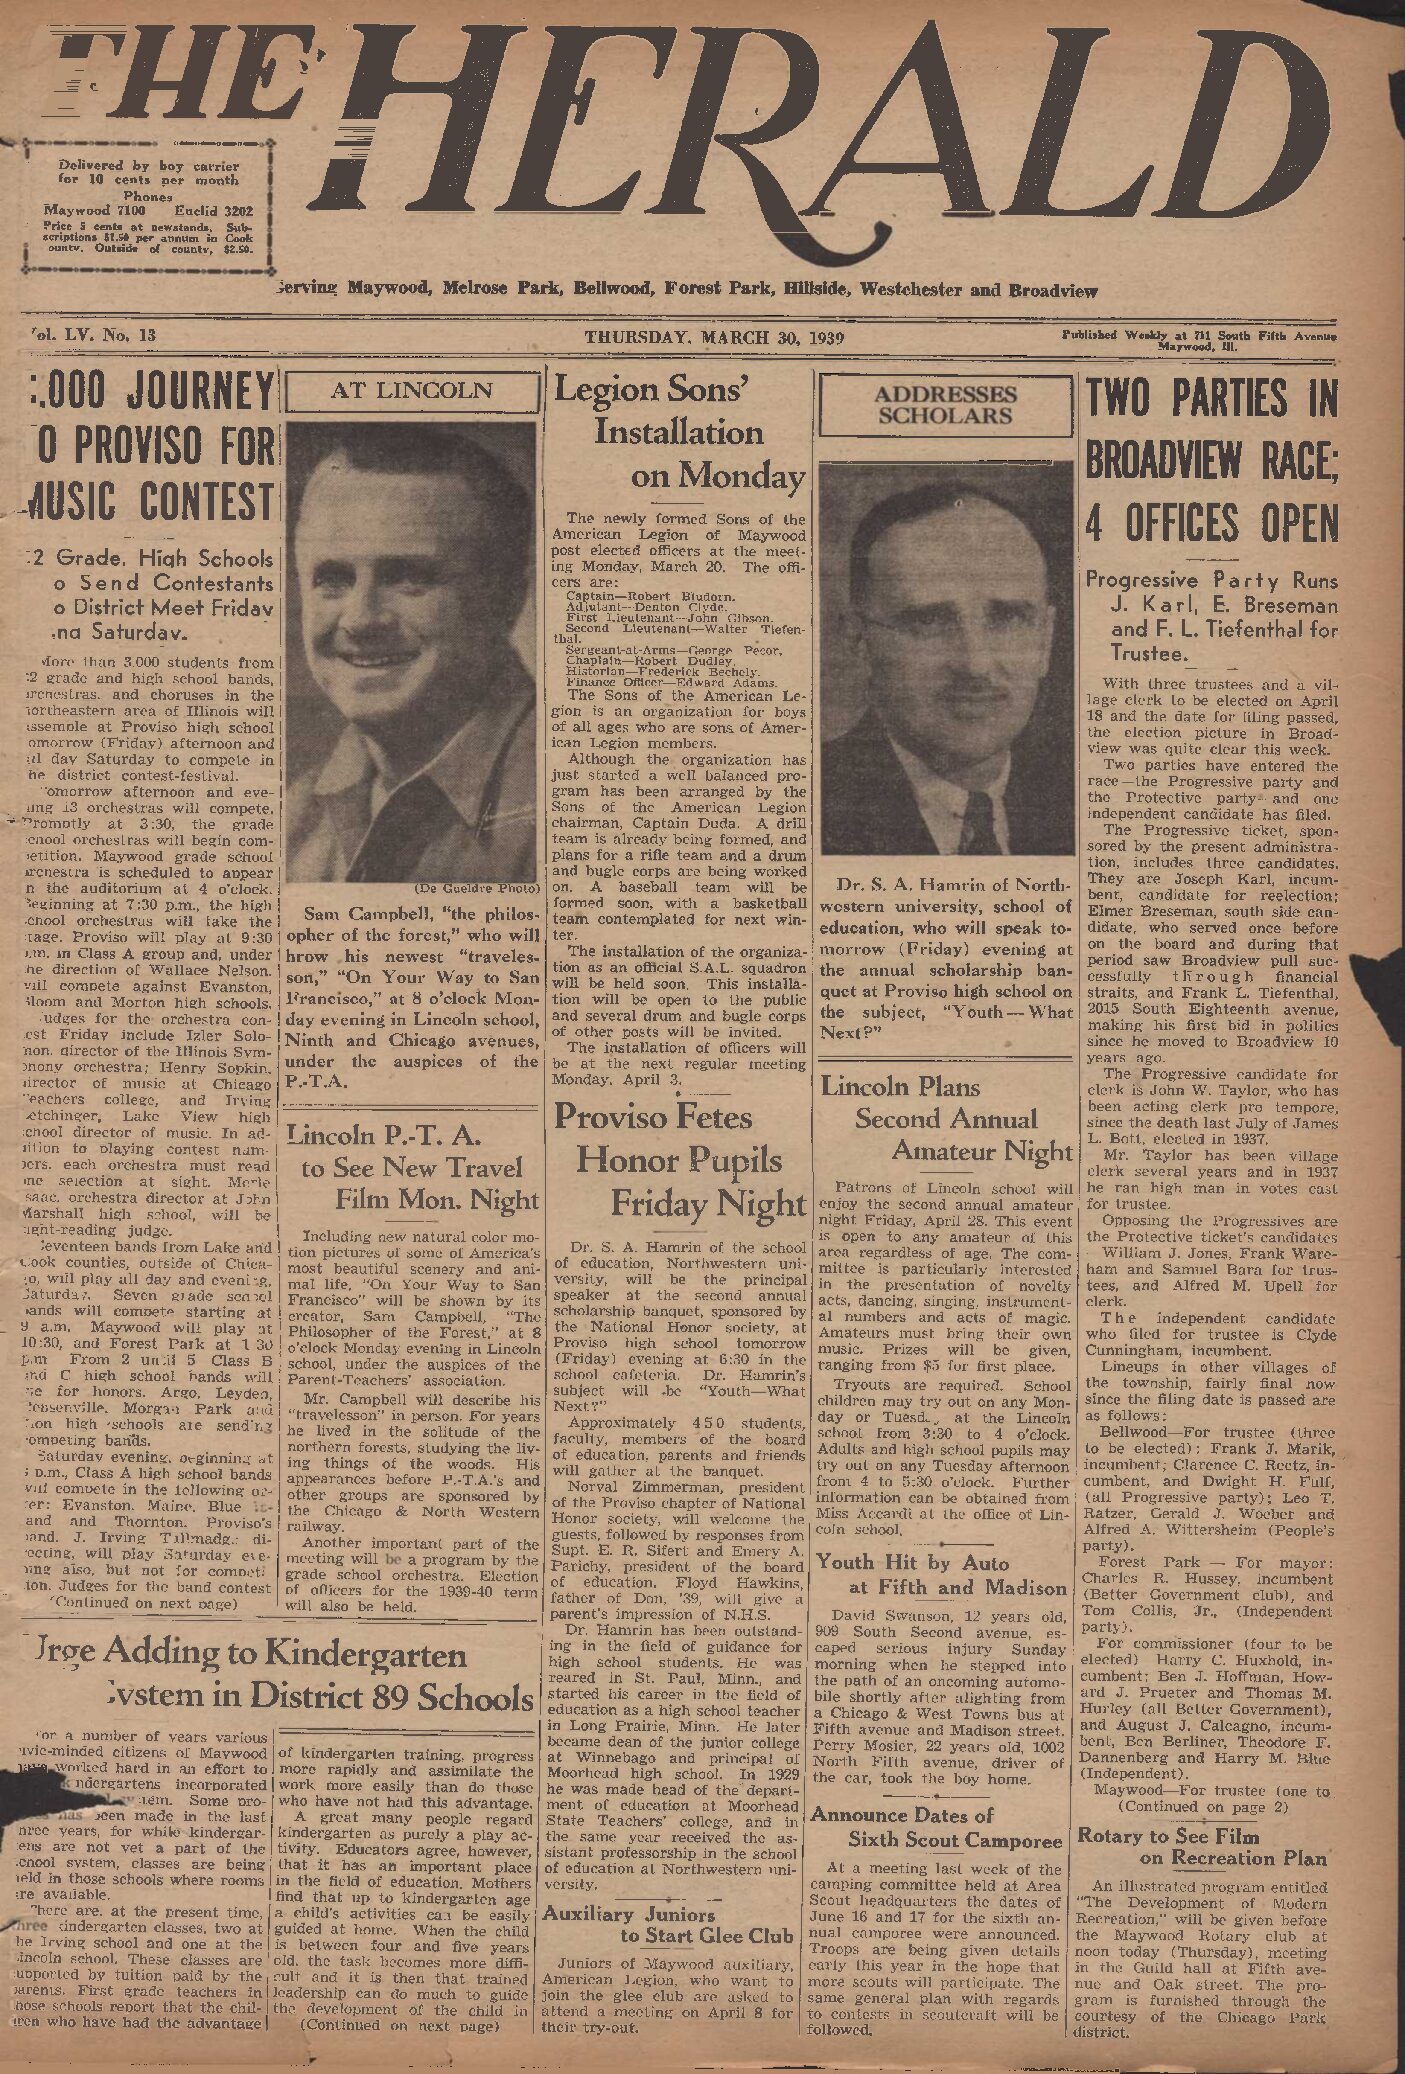 The Herald – 19390330